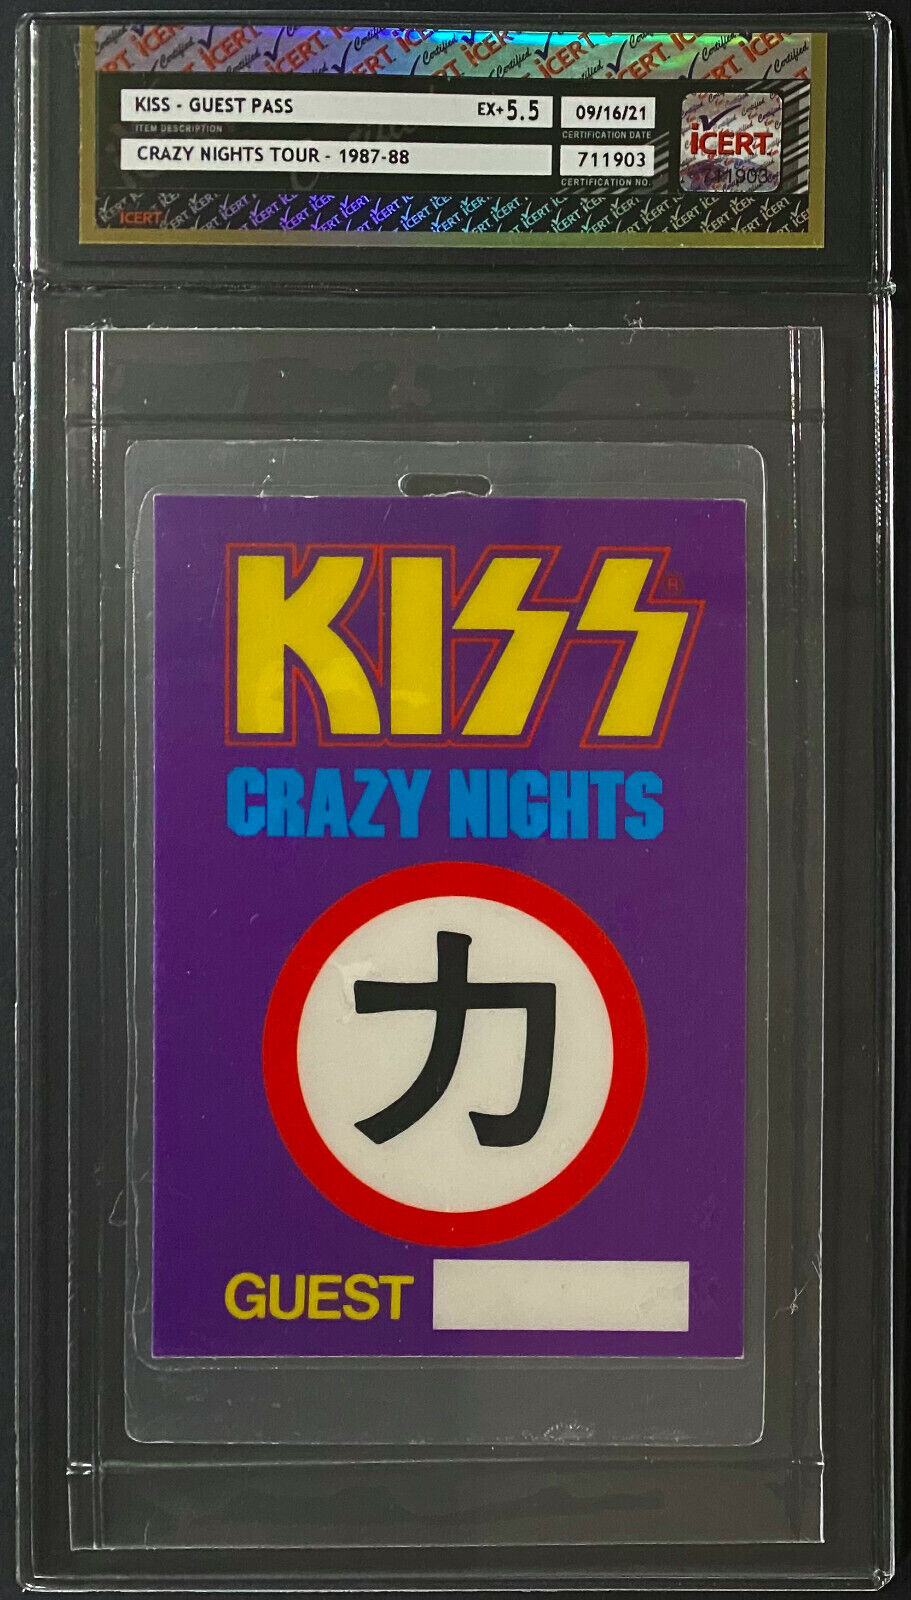 1987-88 Kiss Crazy Night Tour Guest Pass Backstage Pass Vintage iCert 5.5